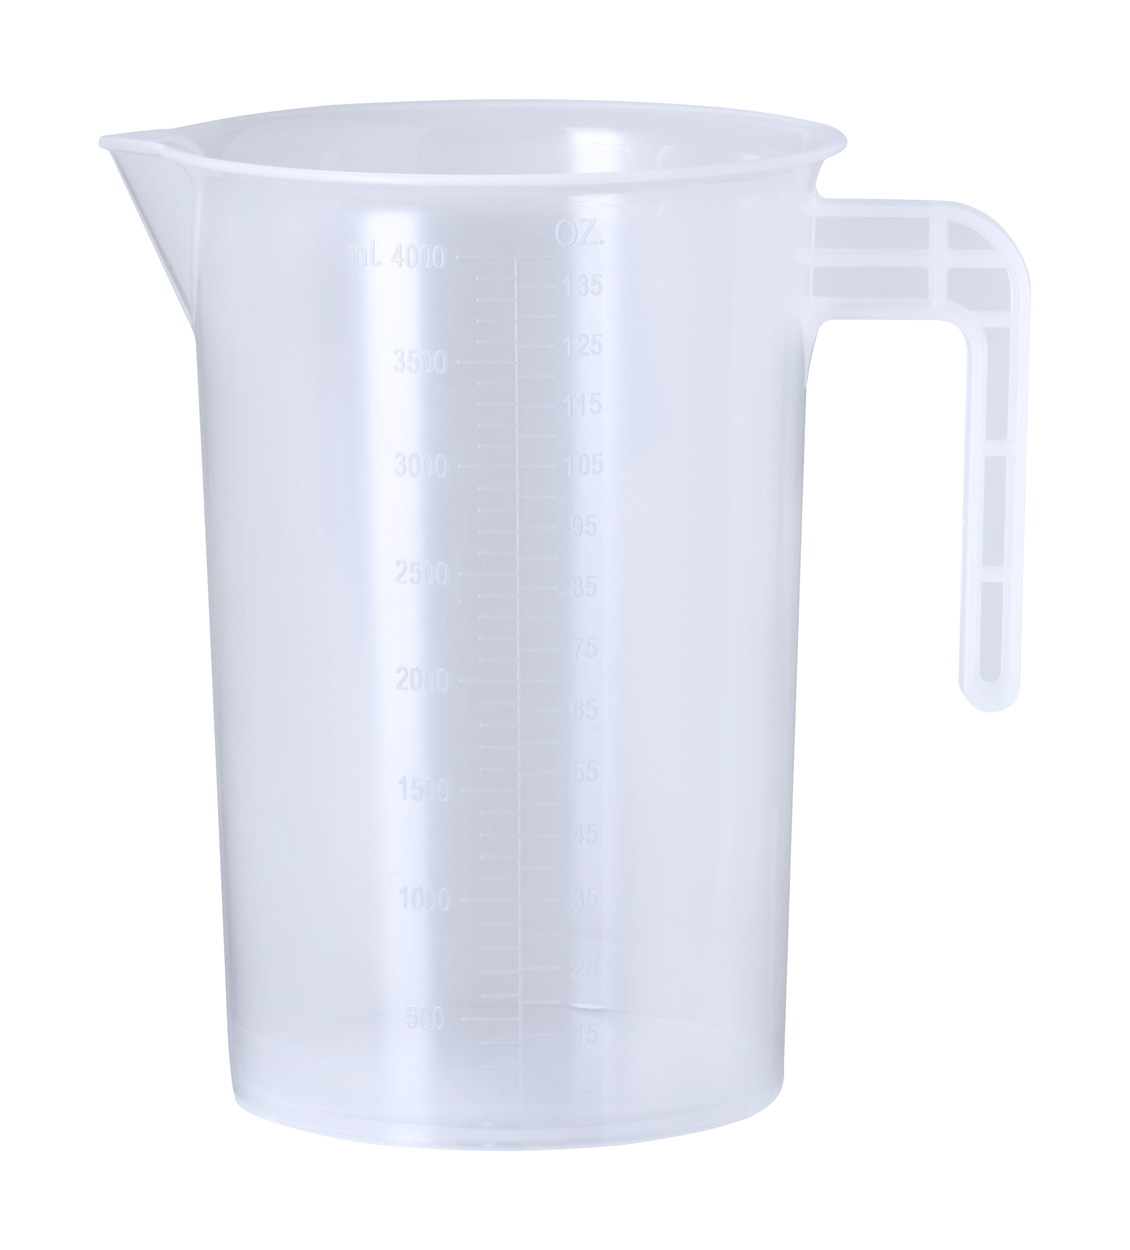 Danlox measuring cup - Transparente